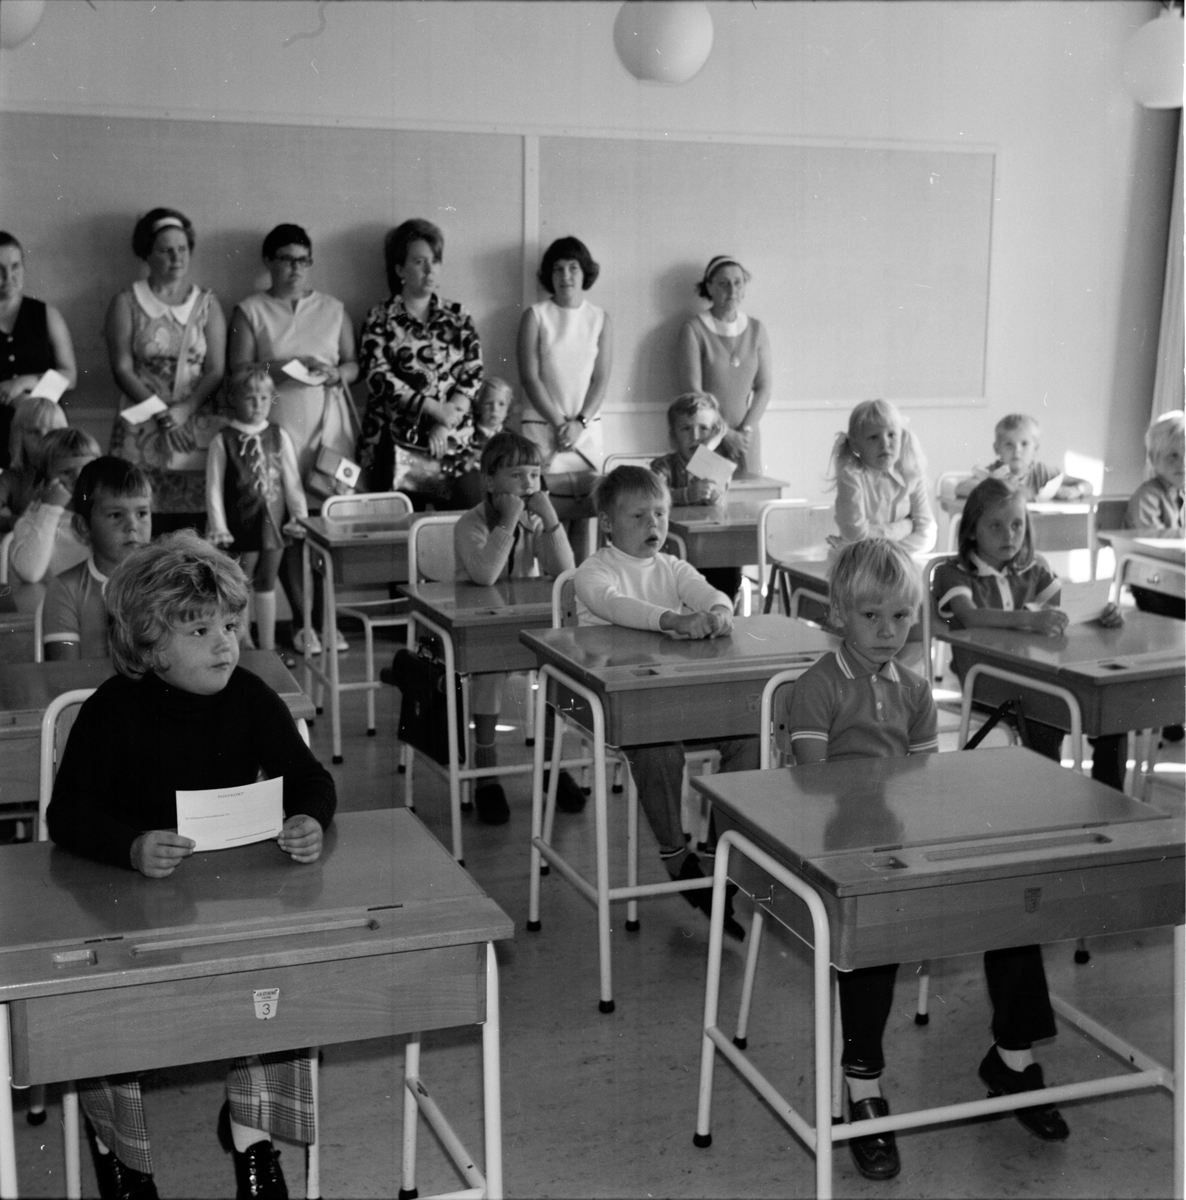 Arbrå,
Skolan börjar ht. aug.
1971
